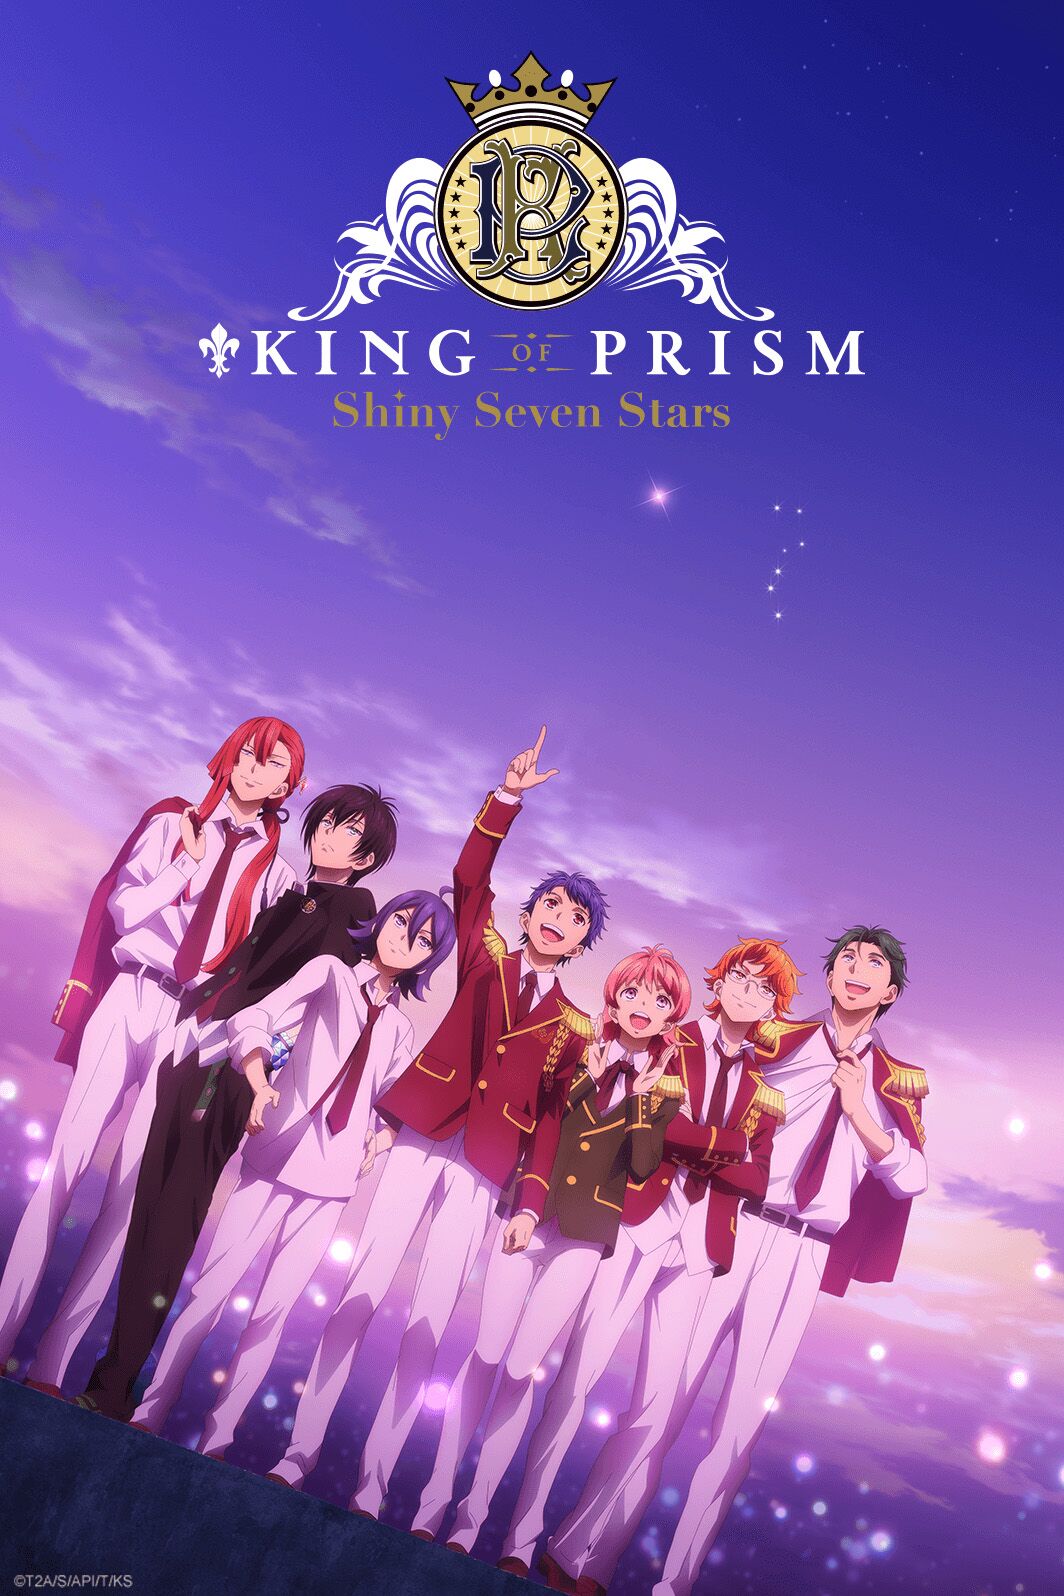 King of Prism -Shiny Seven Stars - Anime